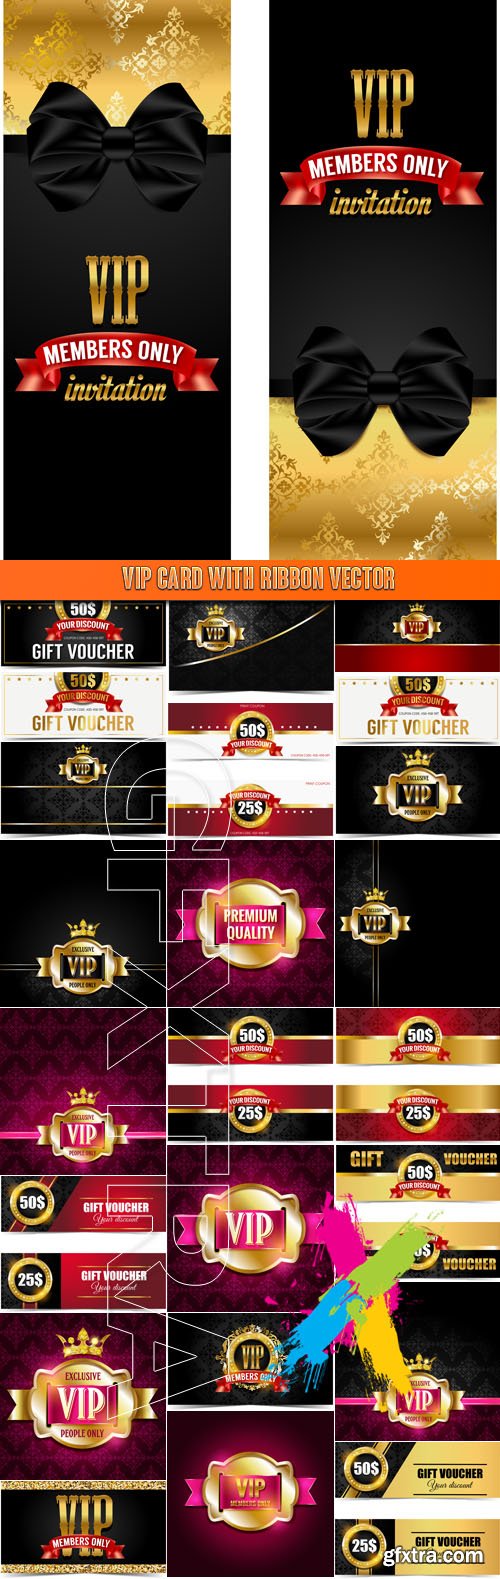 VIP card with ribbon vector